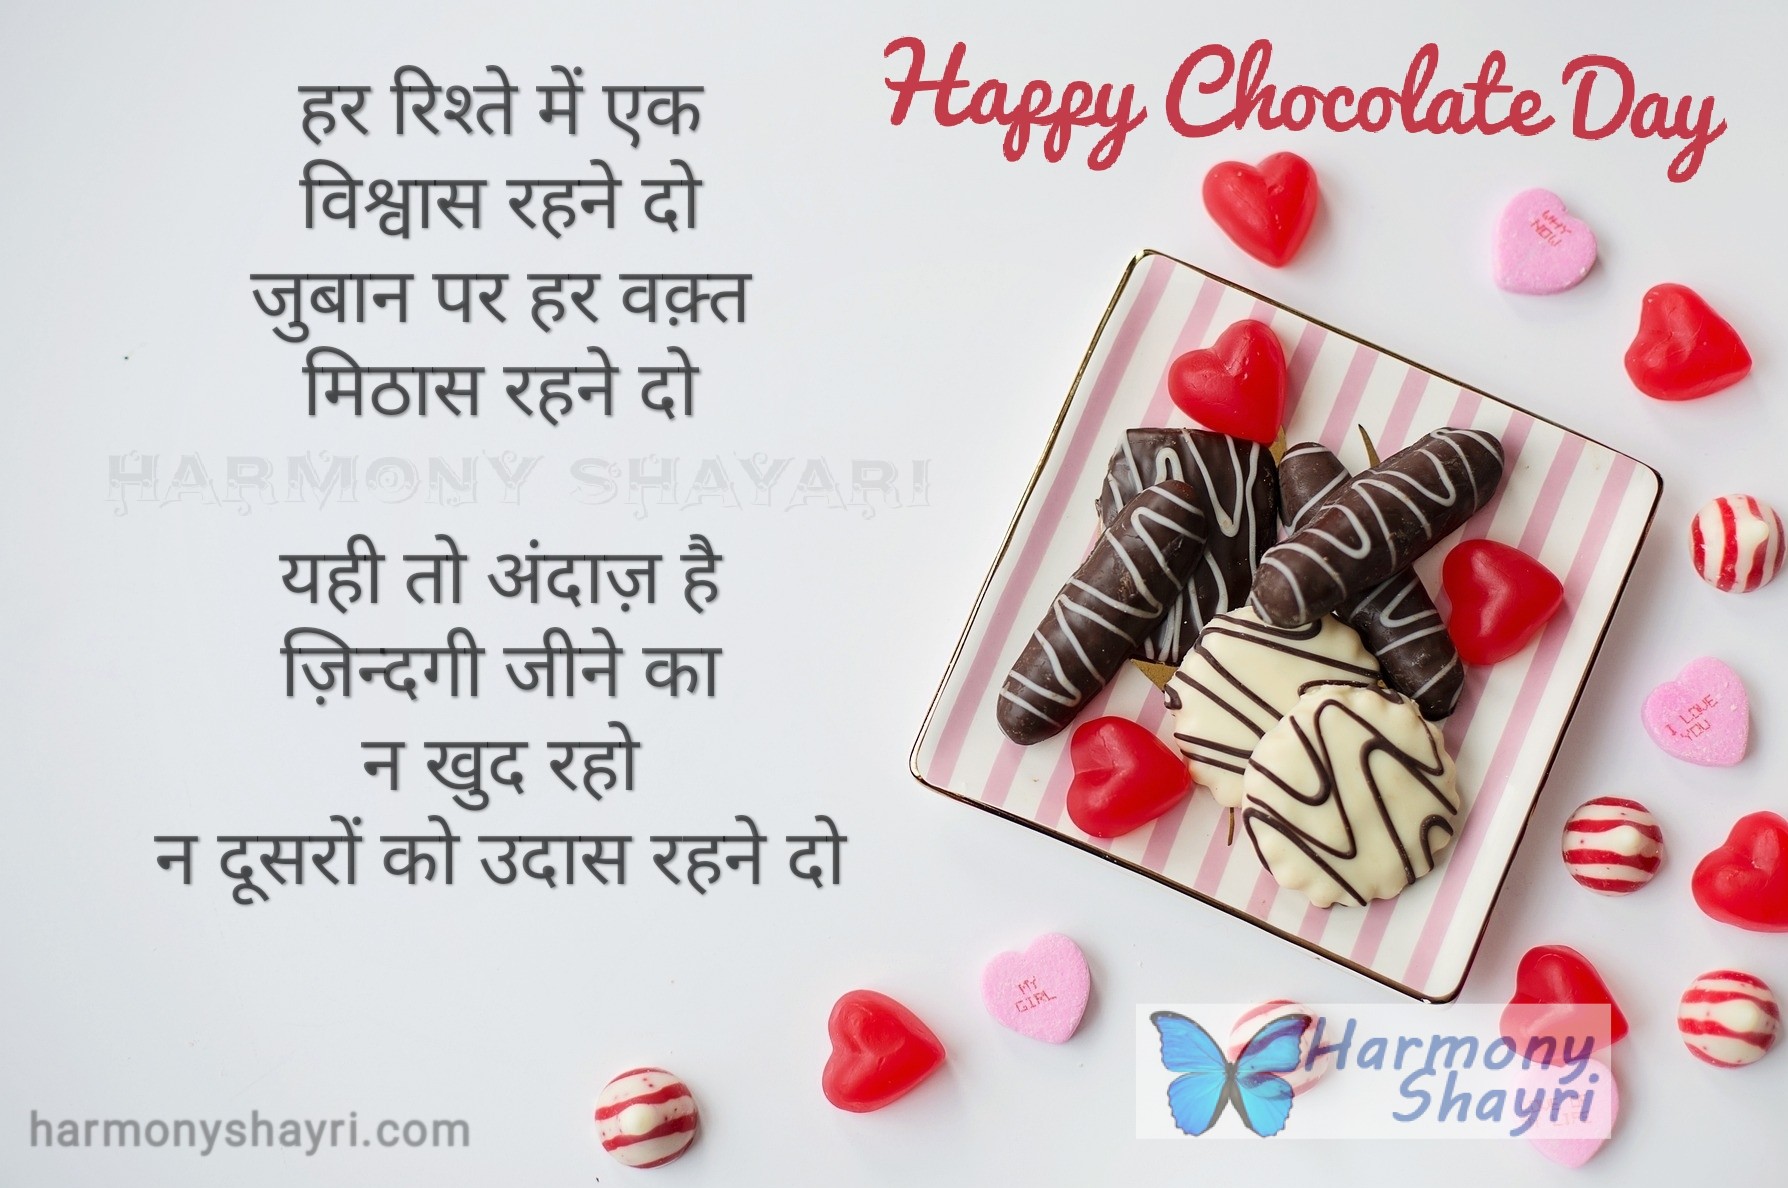 Har rishte mein ek viswas – Happy Chocolate Day